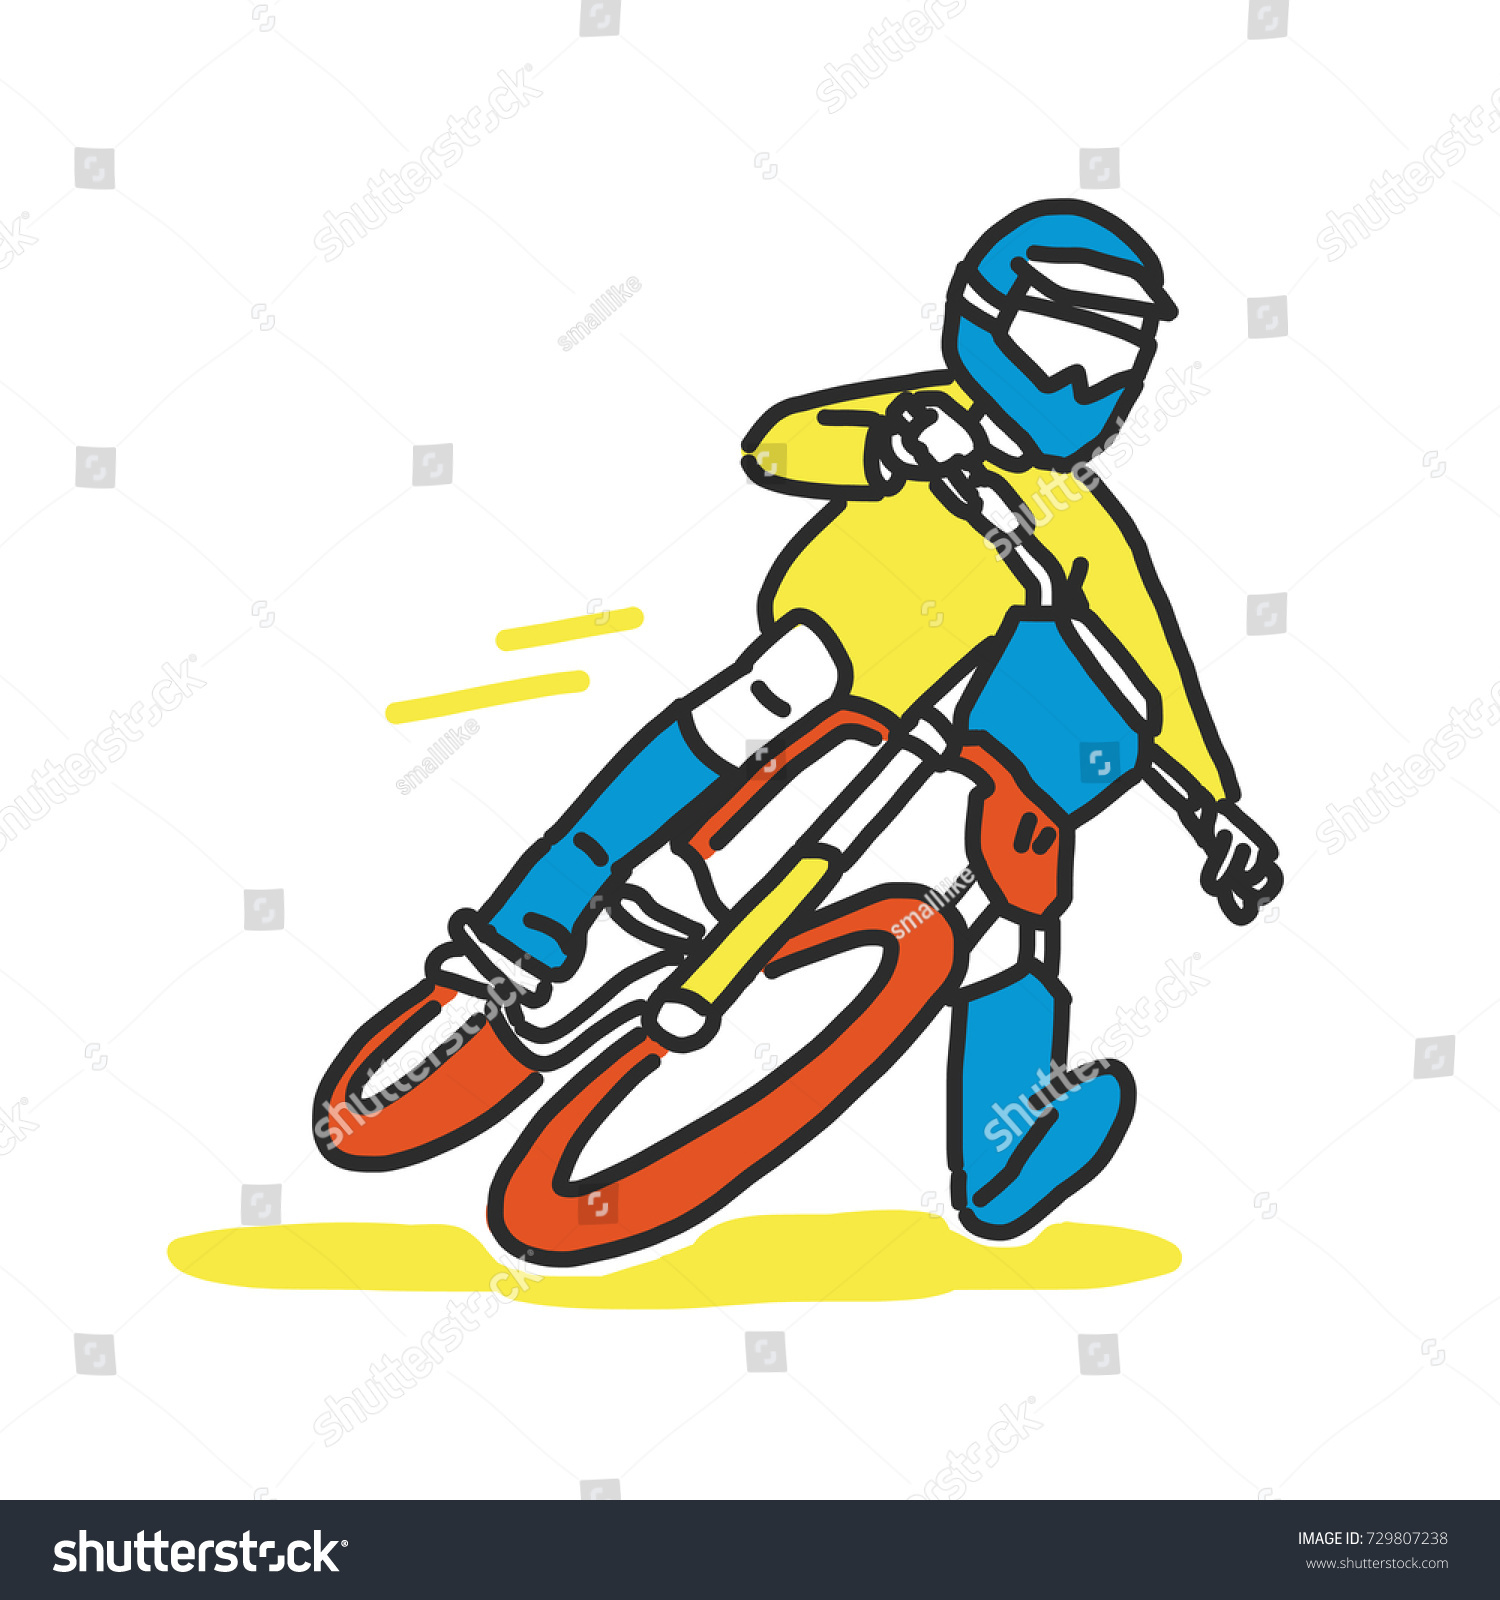 Motocross Illustration Line Drawing Stock Vector (Royalty Free) 729807238